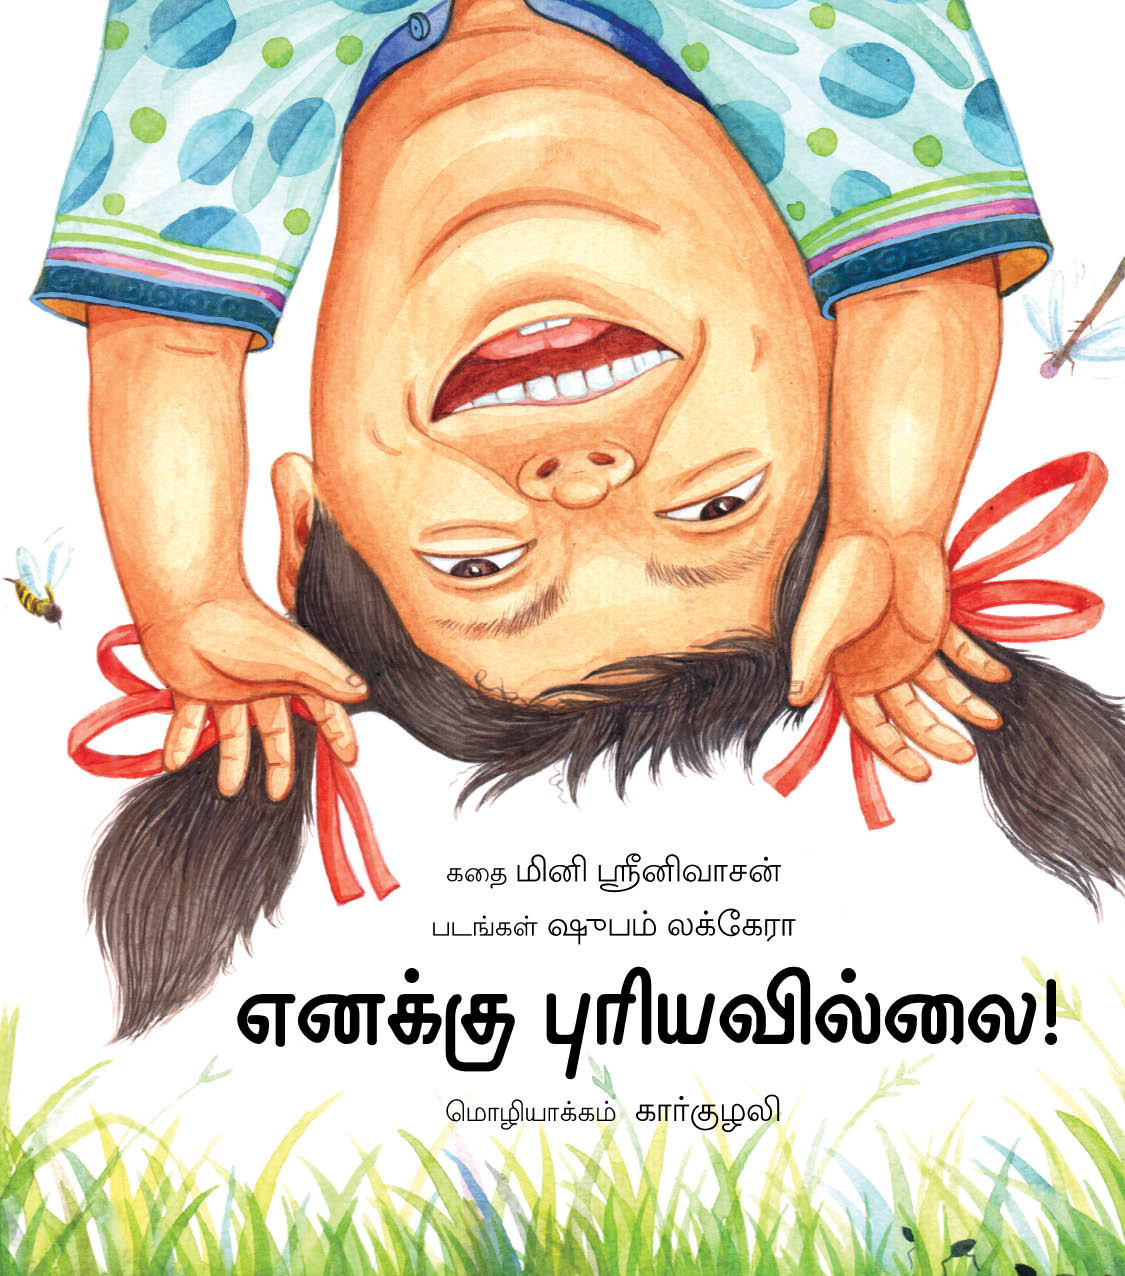 I Didn't Understand!/ Enakku Puriyavillai! (Tamil)